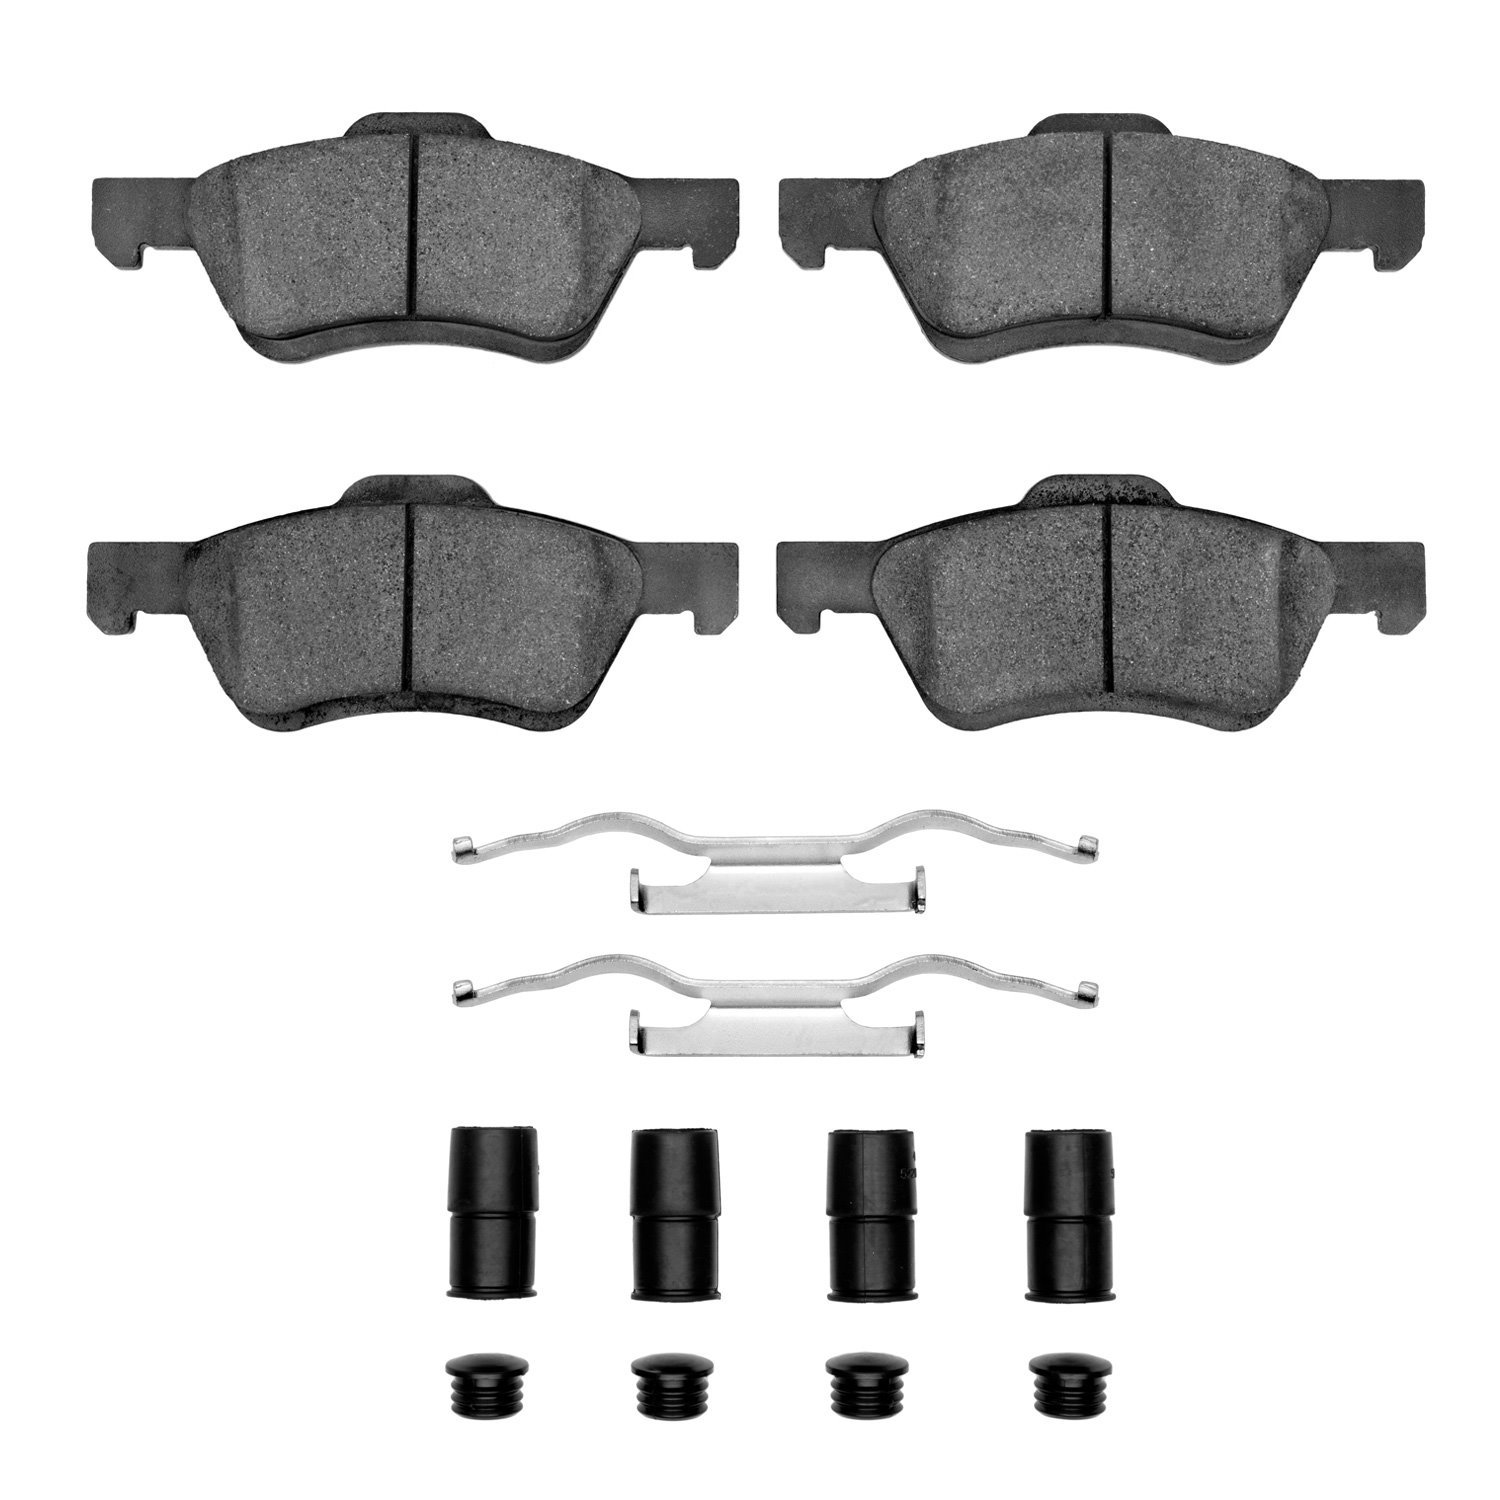 1551-1047-32 5000 Advanced Ceramic Brake Pads & Hardware Kit, 2009-2012 Ford/Lincoln/Mercury/Mazda, Position: Front